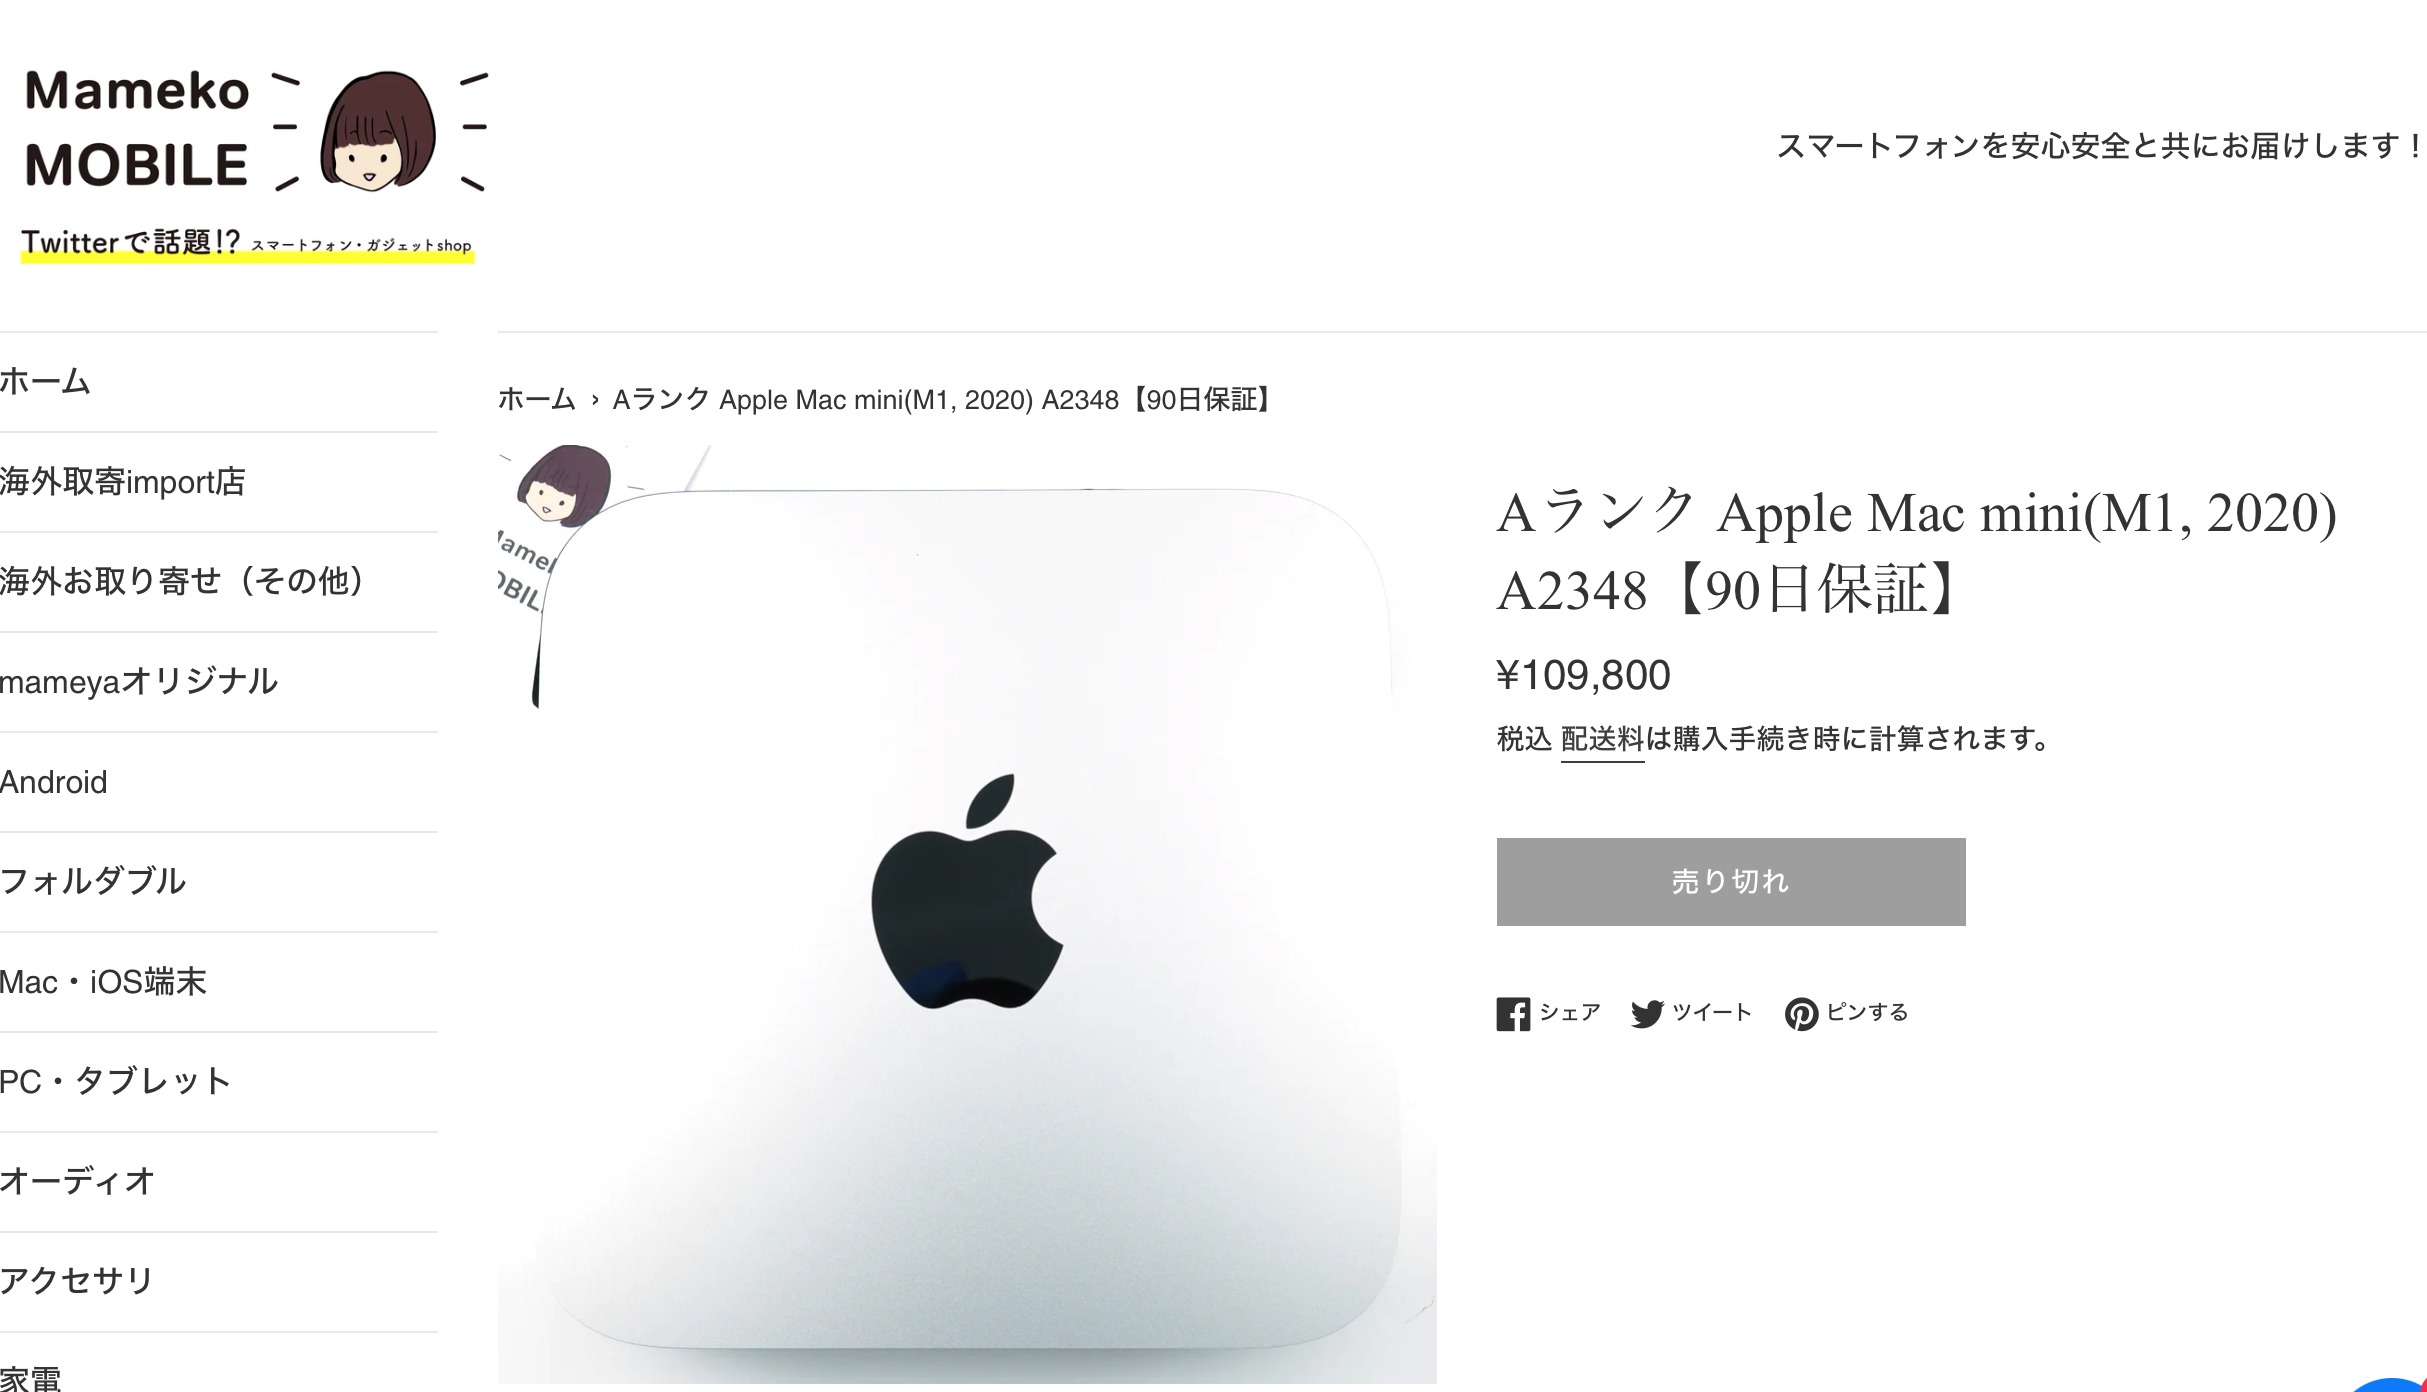 M1 MacBook AirからM1 Mac miniに買い替えることにした話